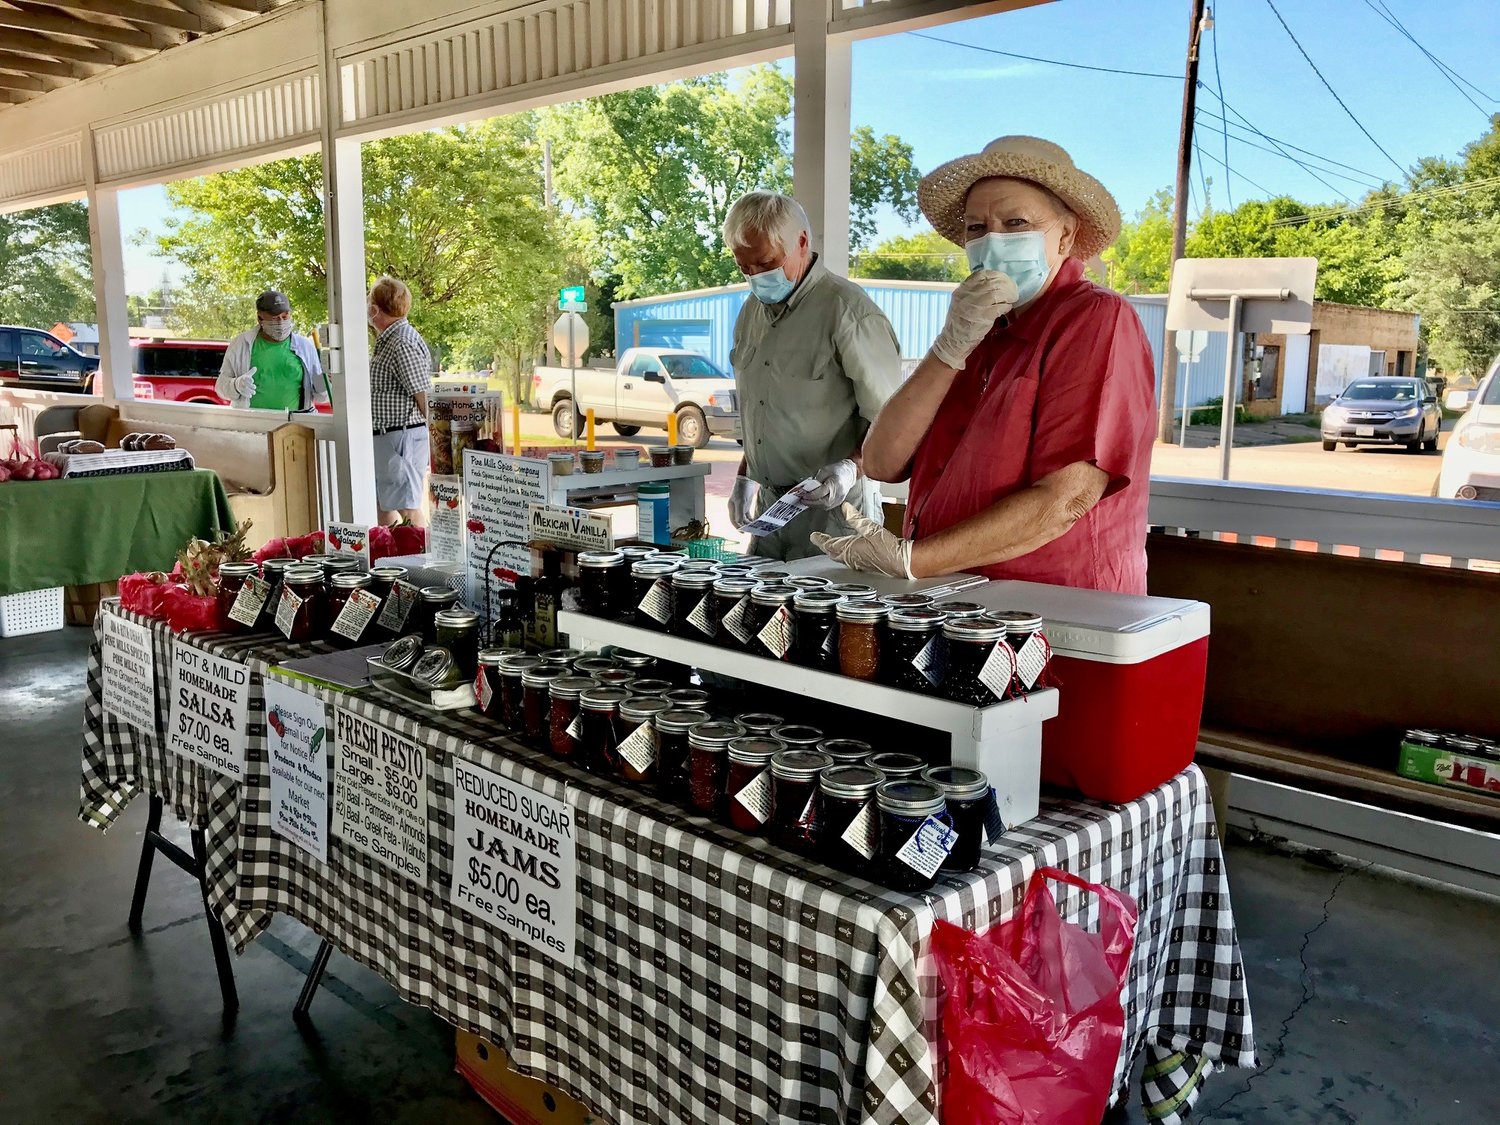 Rita and Jim O’Hara of Pine Mills are regulars at the Mineola Farmers Market. Rita volunteers to help manage the market.